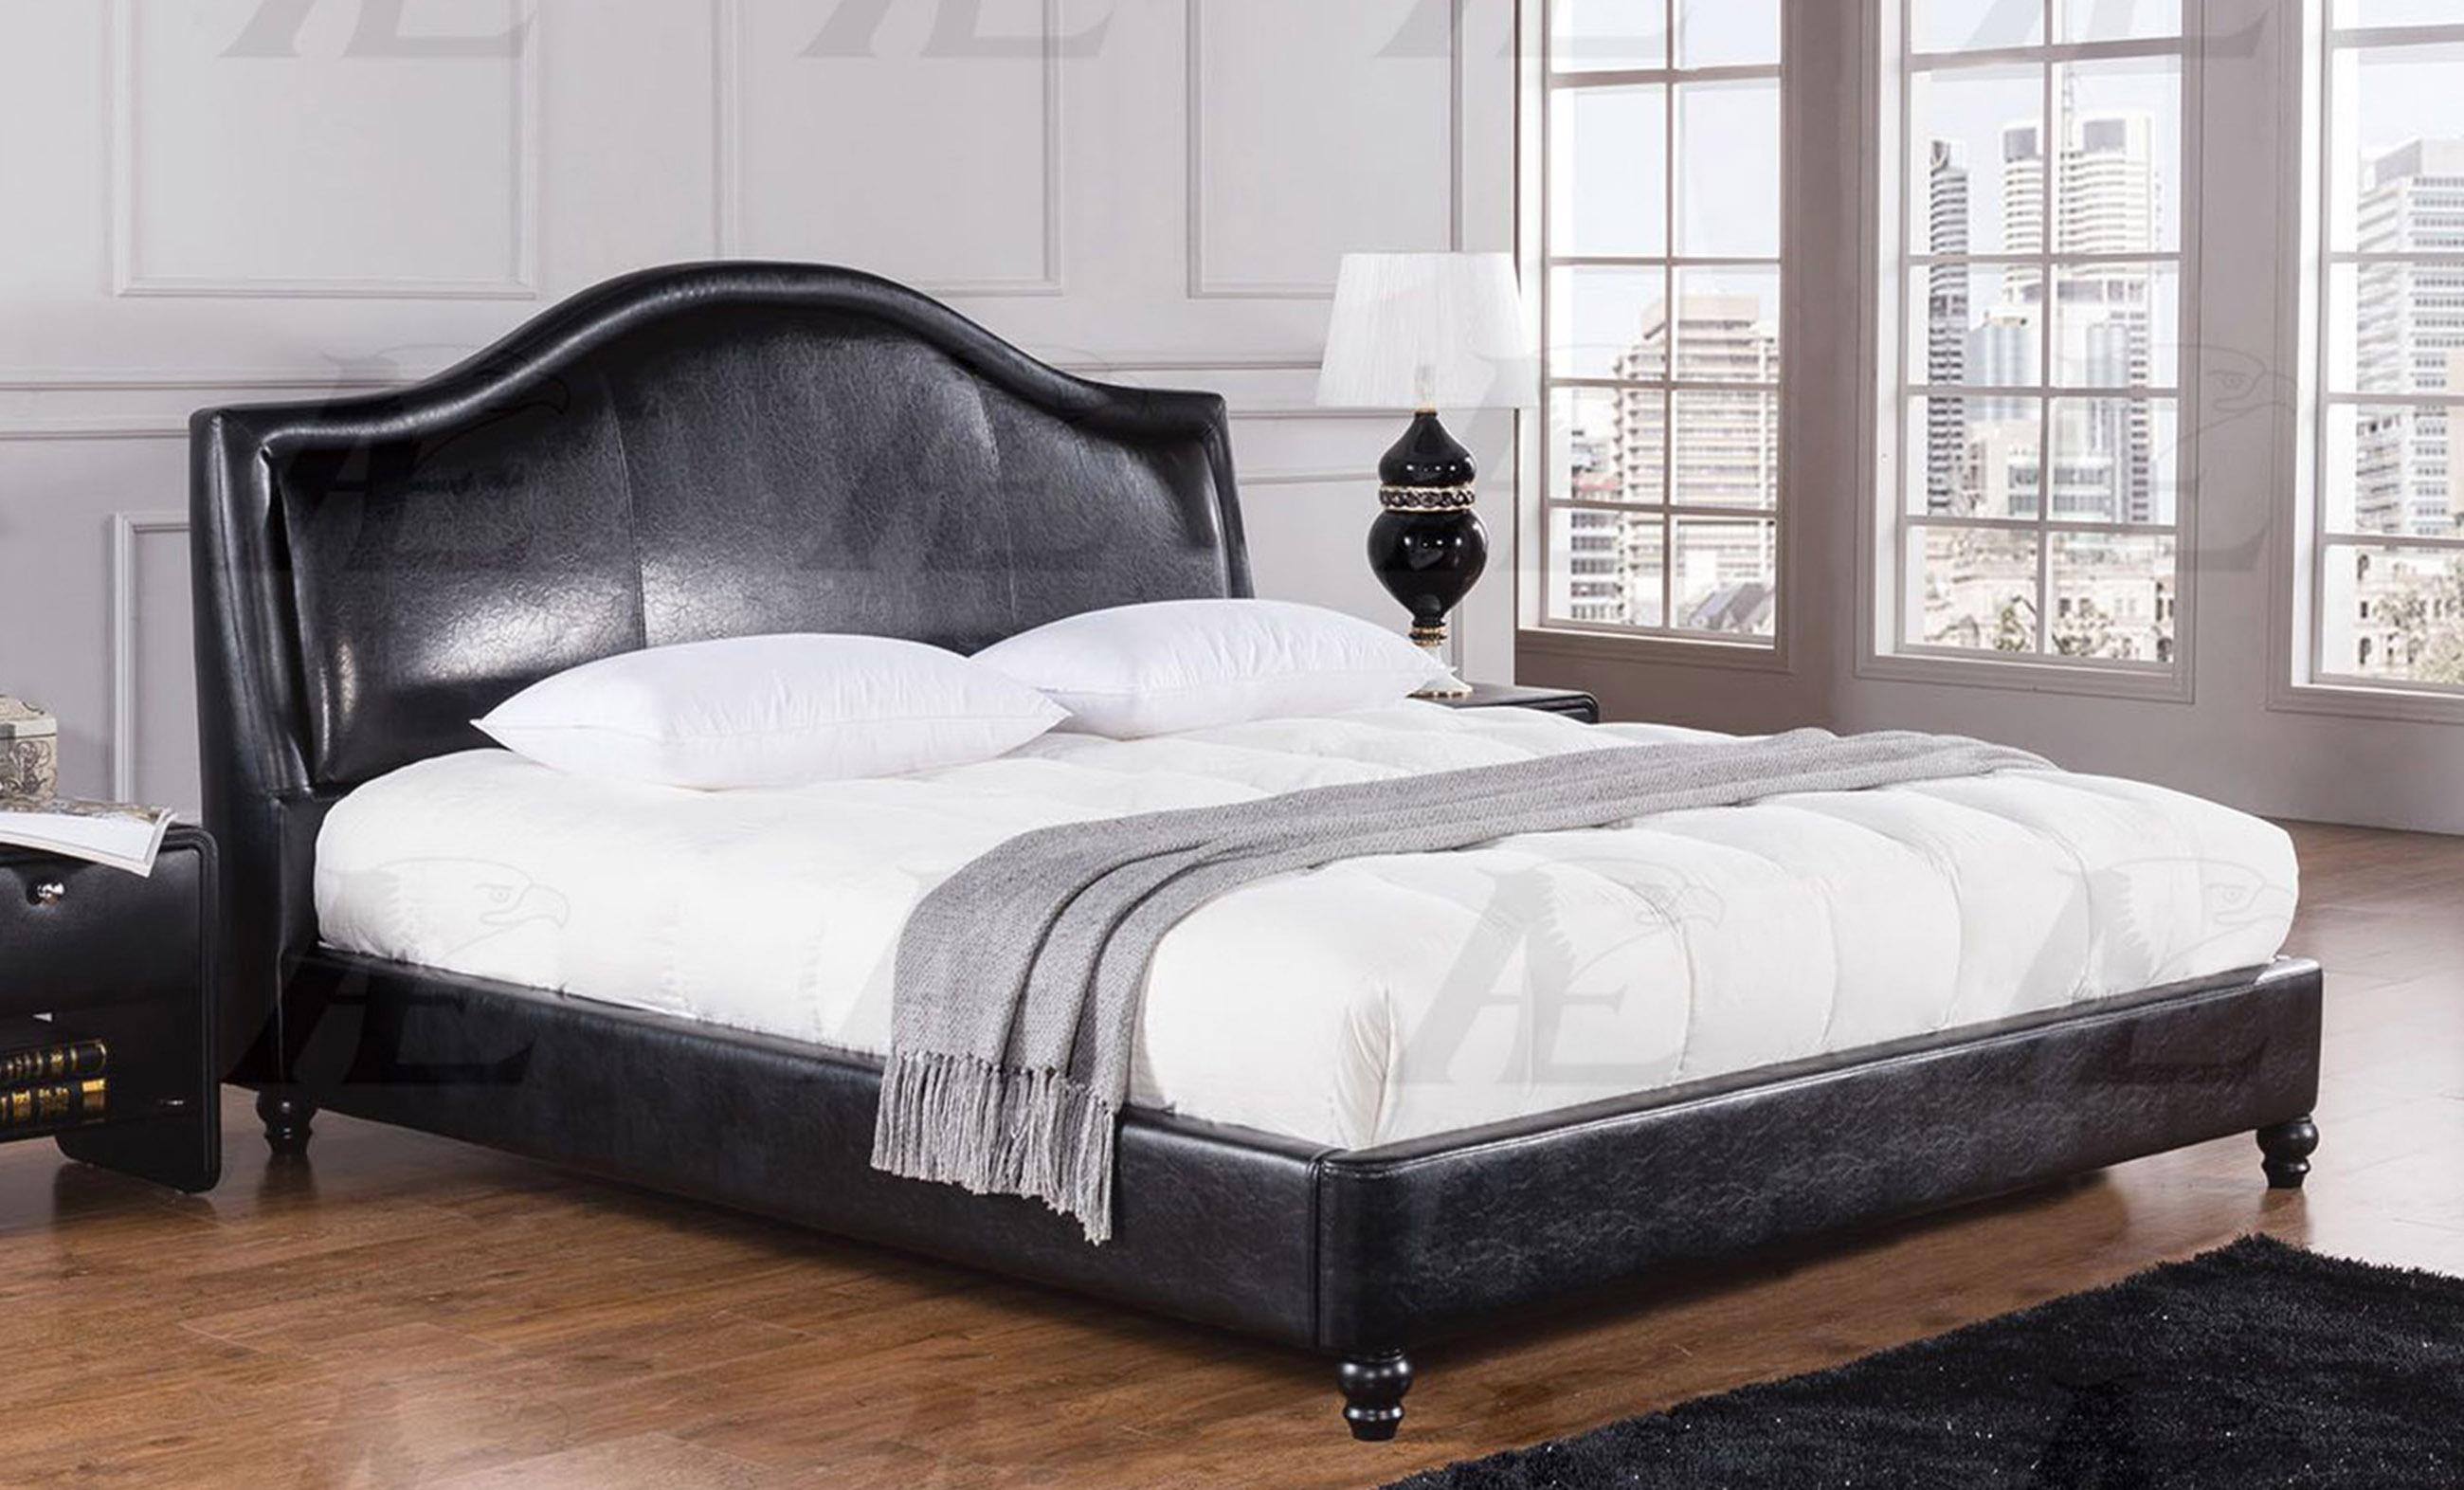 

    
American Eagle Furniture B-D059 Platform Bed Black AE B-D059-Q
